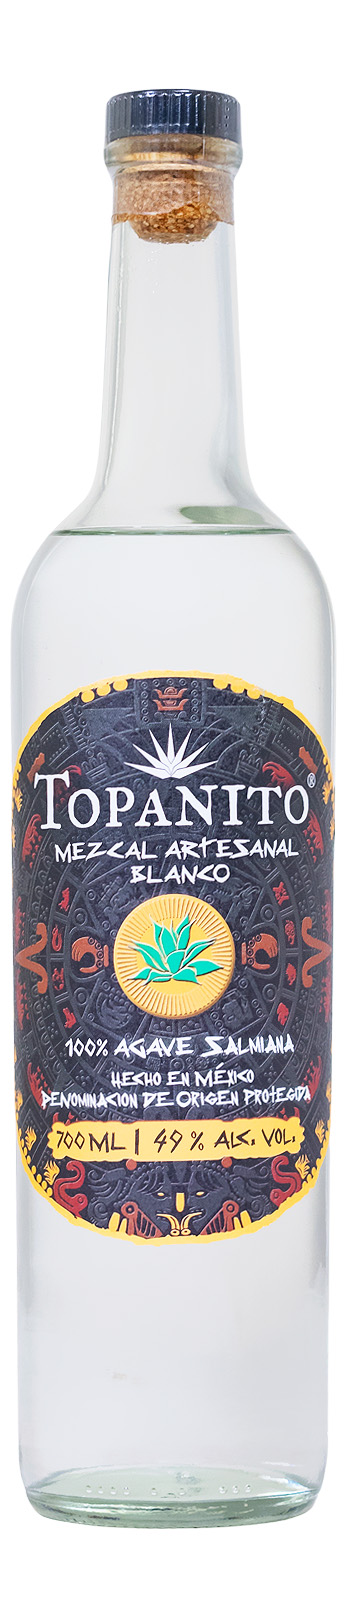 Topanito Mezcal 100 % Agave Salmiana - 0,7L 49% vol